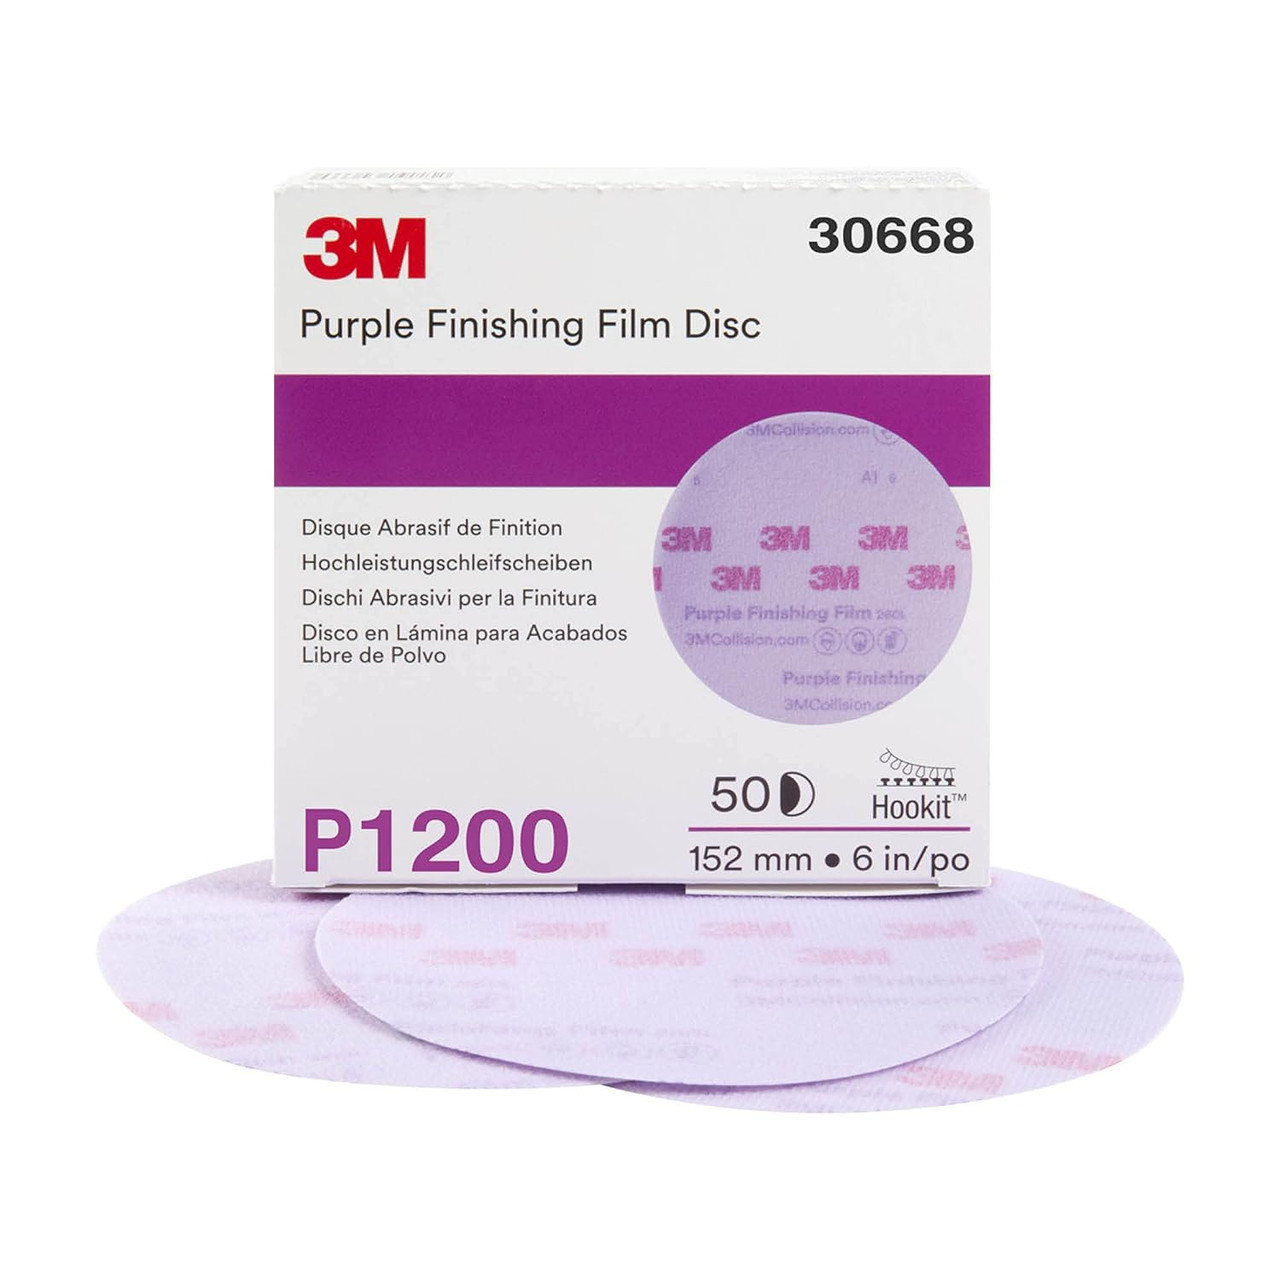 3M 30668 Purple Finishing Film Hookit Disc, 6 in, P1200, 50 discs per box